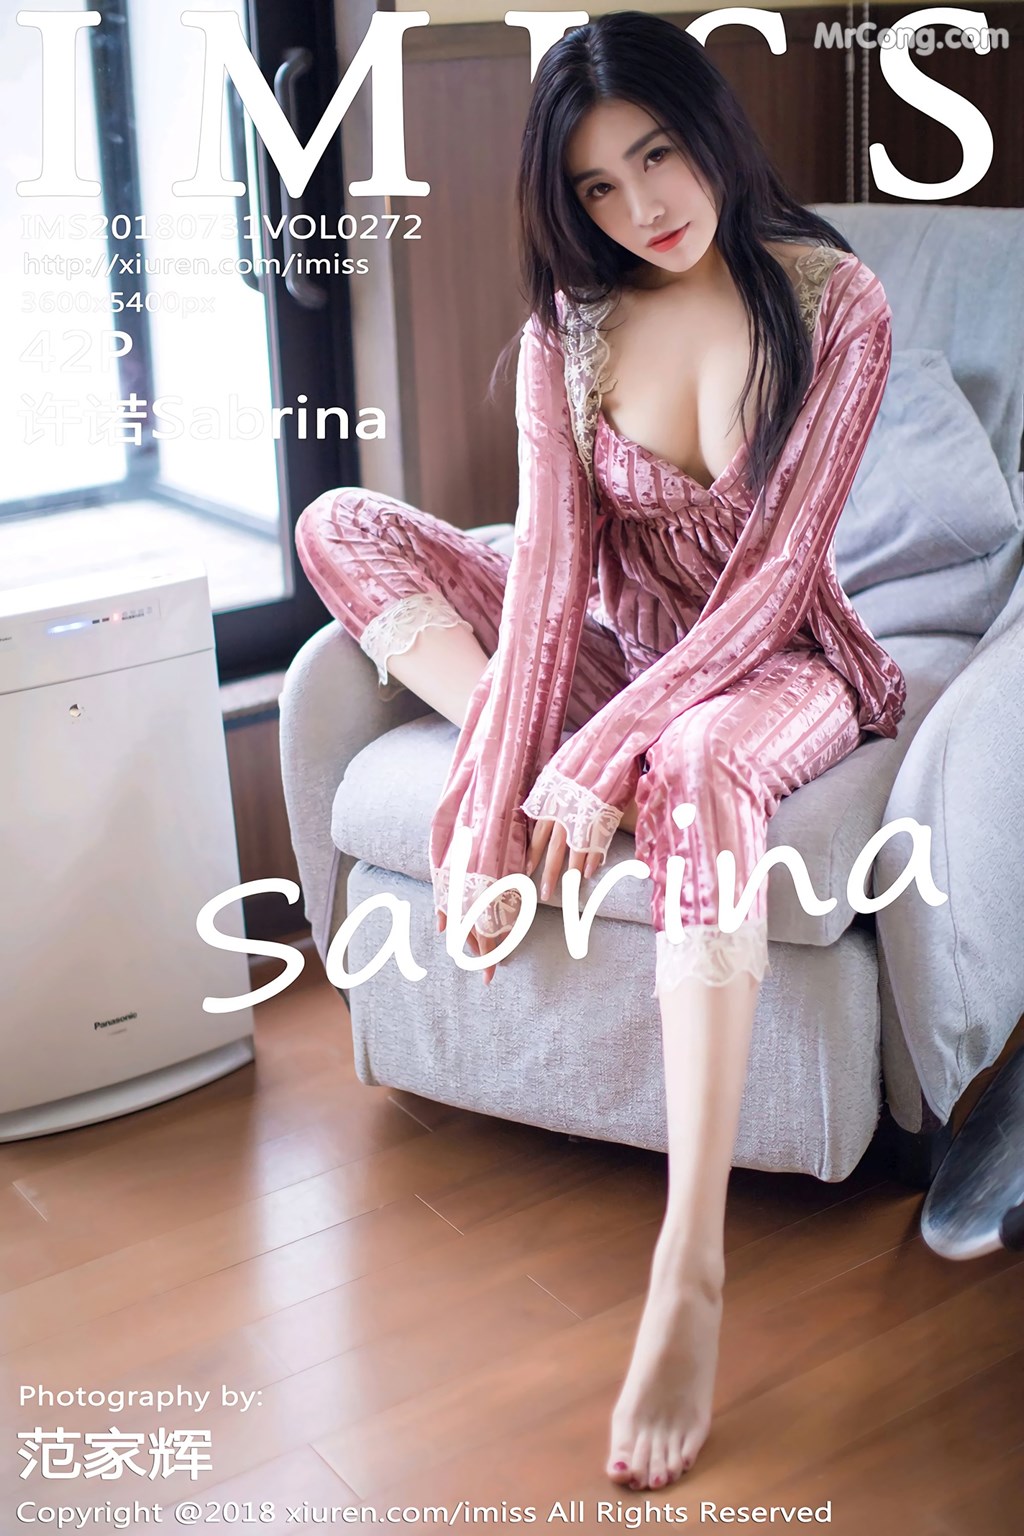 IMISS Vol.272: Model Sabrina (许诺) (43 photos) photo 1-0